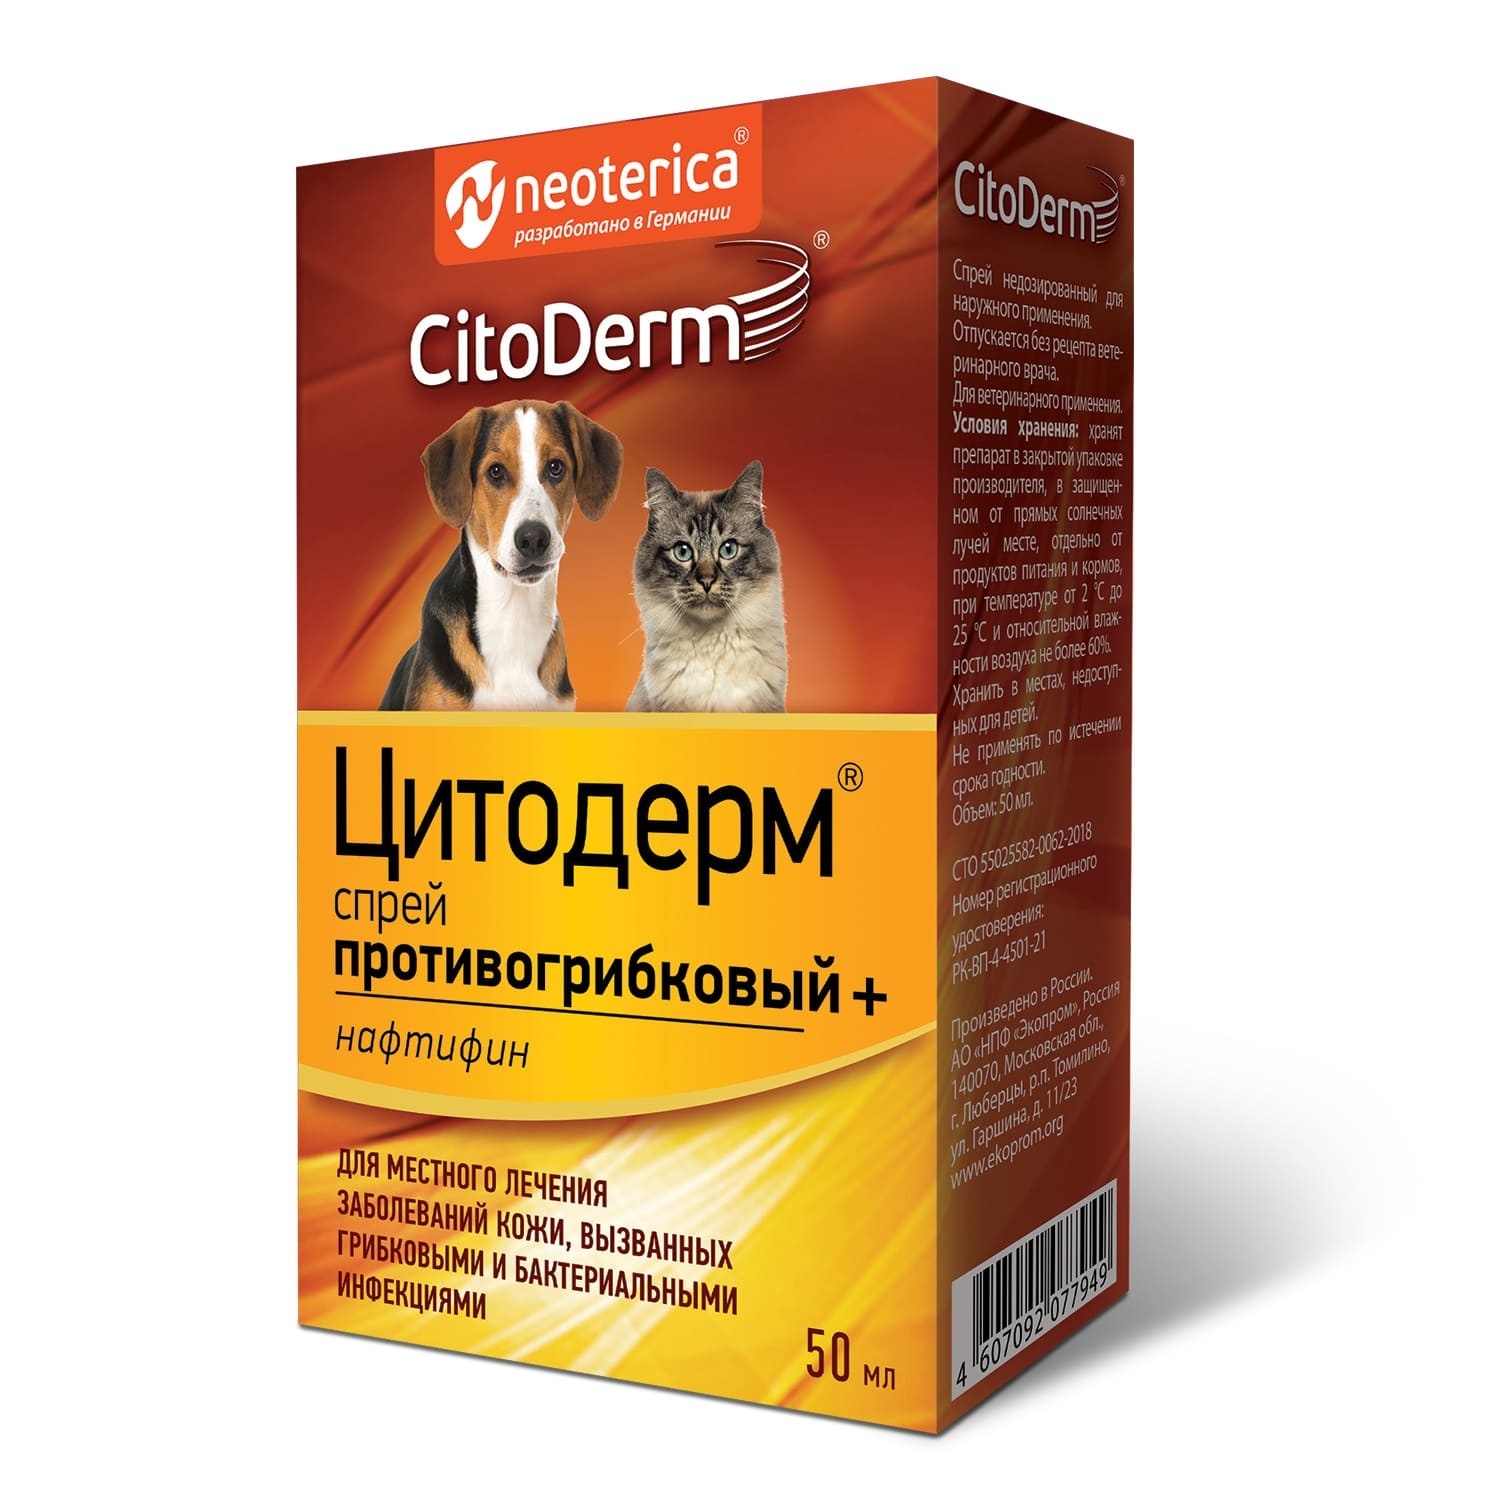 CitoDerm CitoDerm cпрей противогрибковый+ 50мл (71 г) citoderm спрей противогрибковый для собак и кошек 50мл